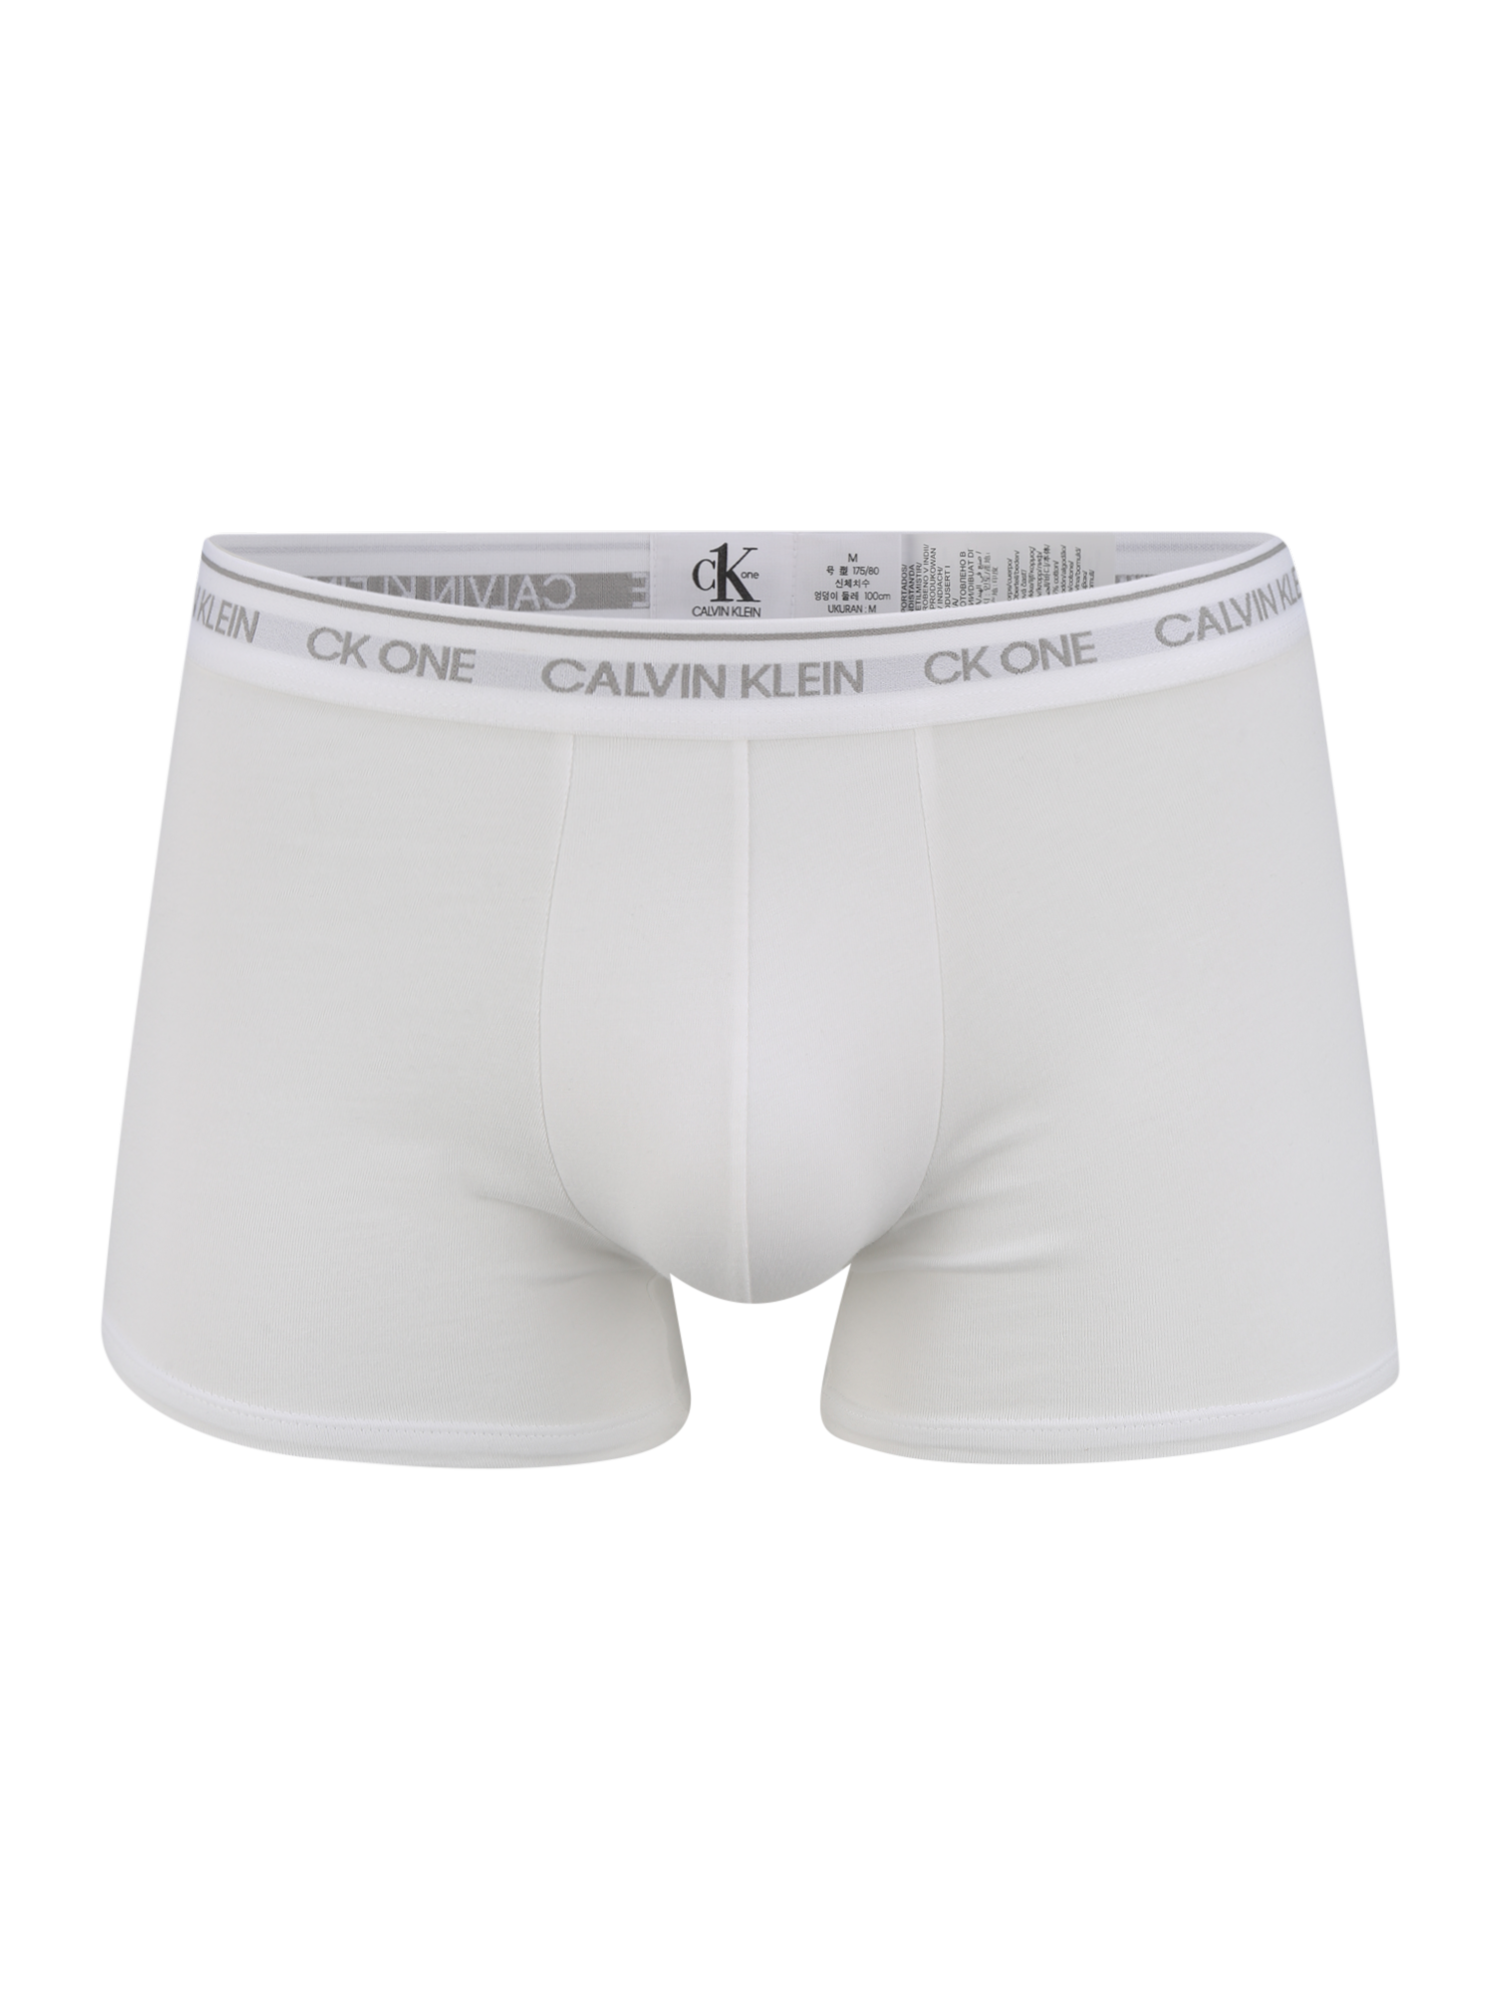 Intimo UJ9Lv Calvin Klein Underwear Boxer Trunk in Bianco 